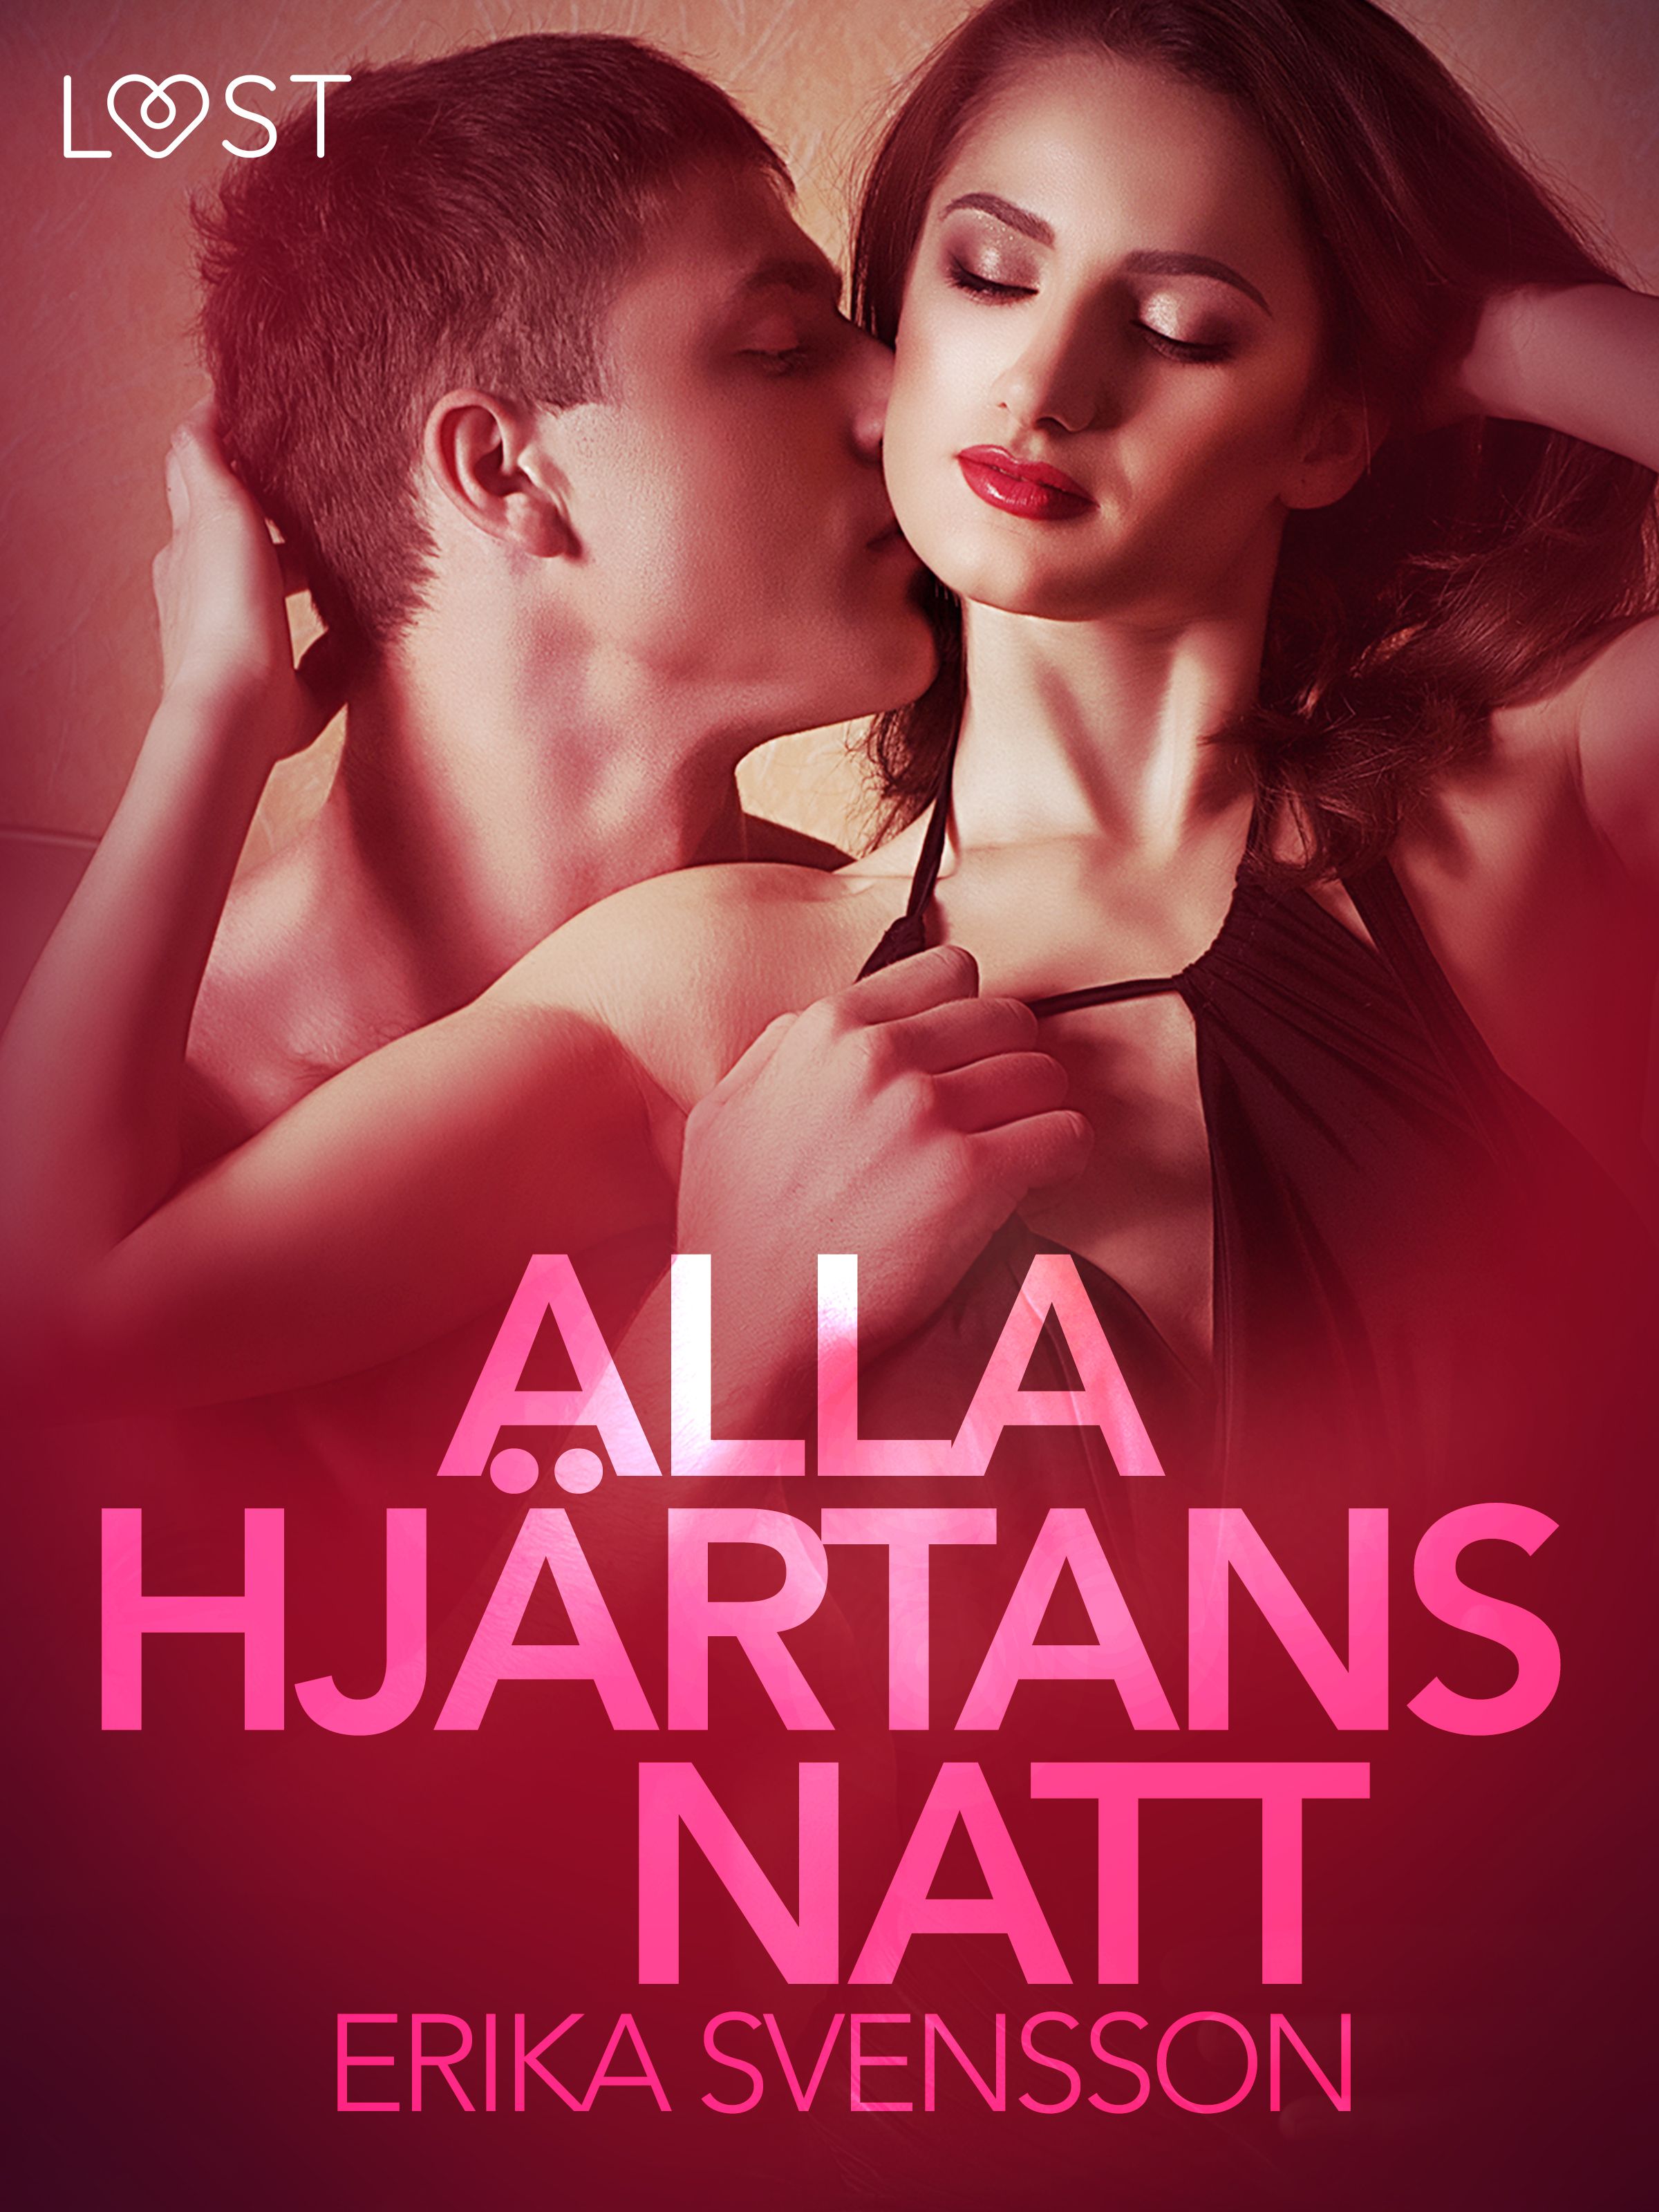 Alla hjärtans natt - erotisk novell, eBook by Katja Slonawski